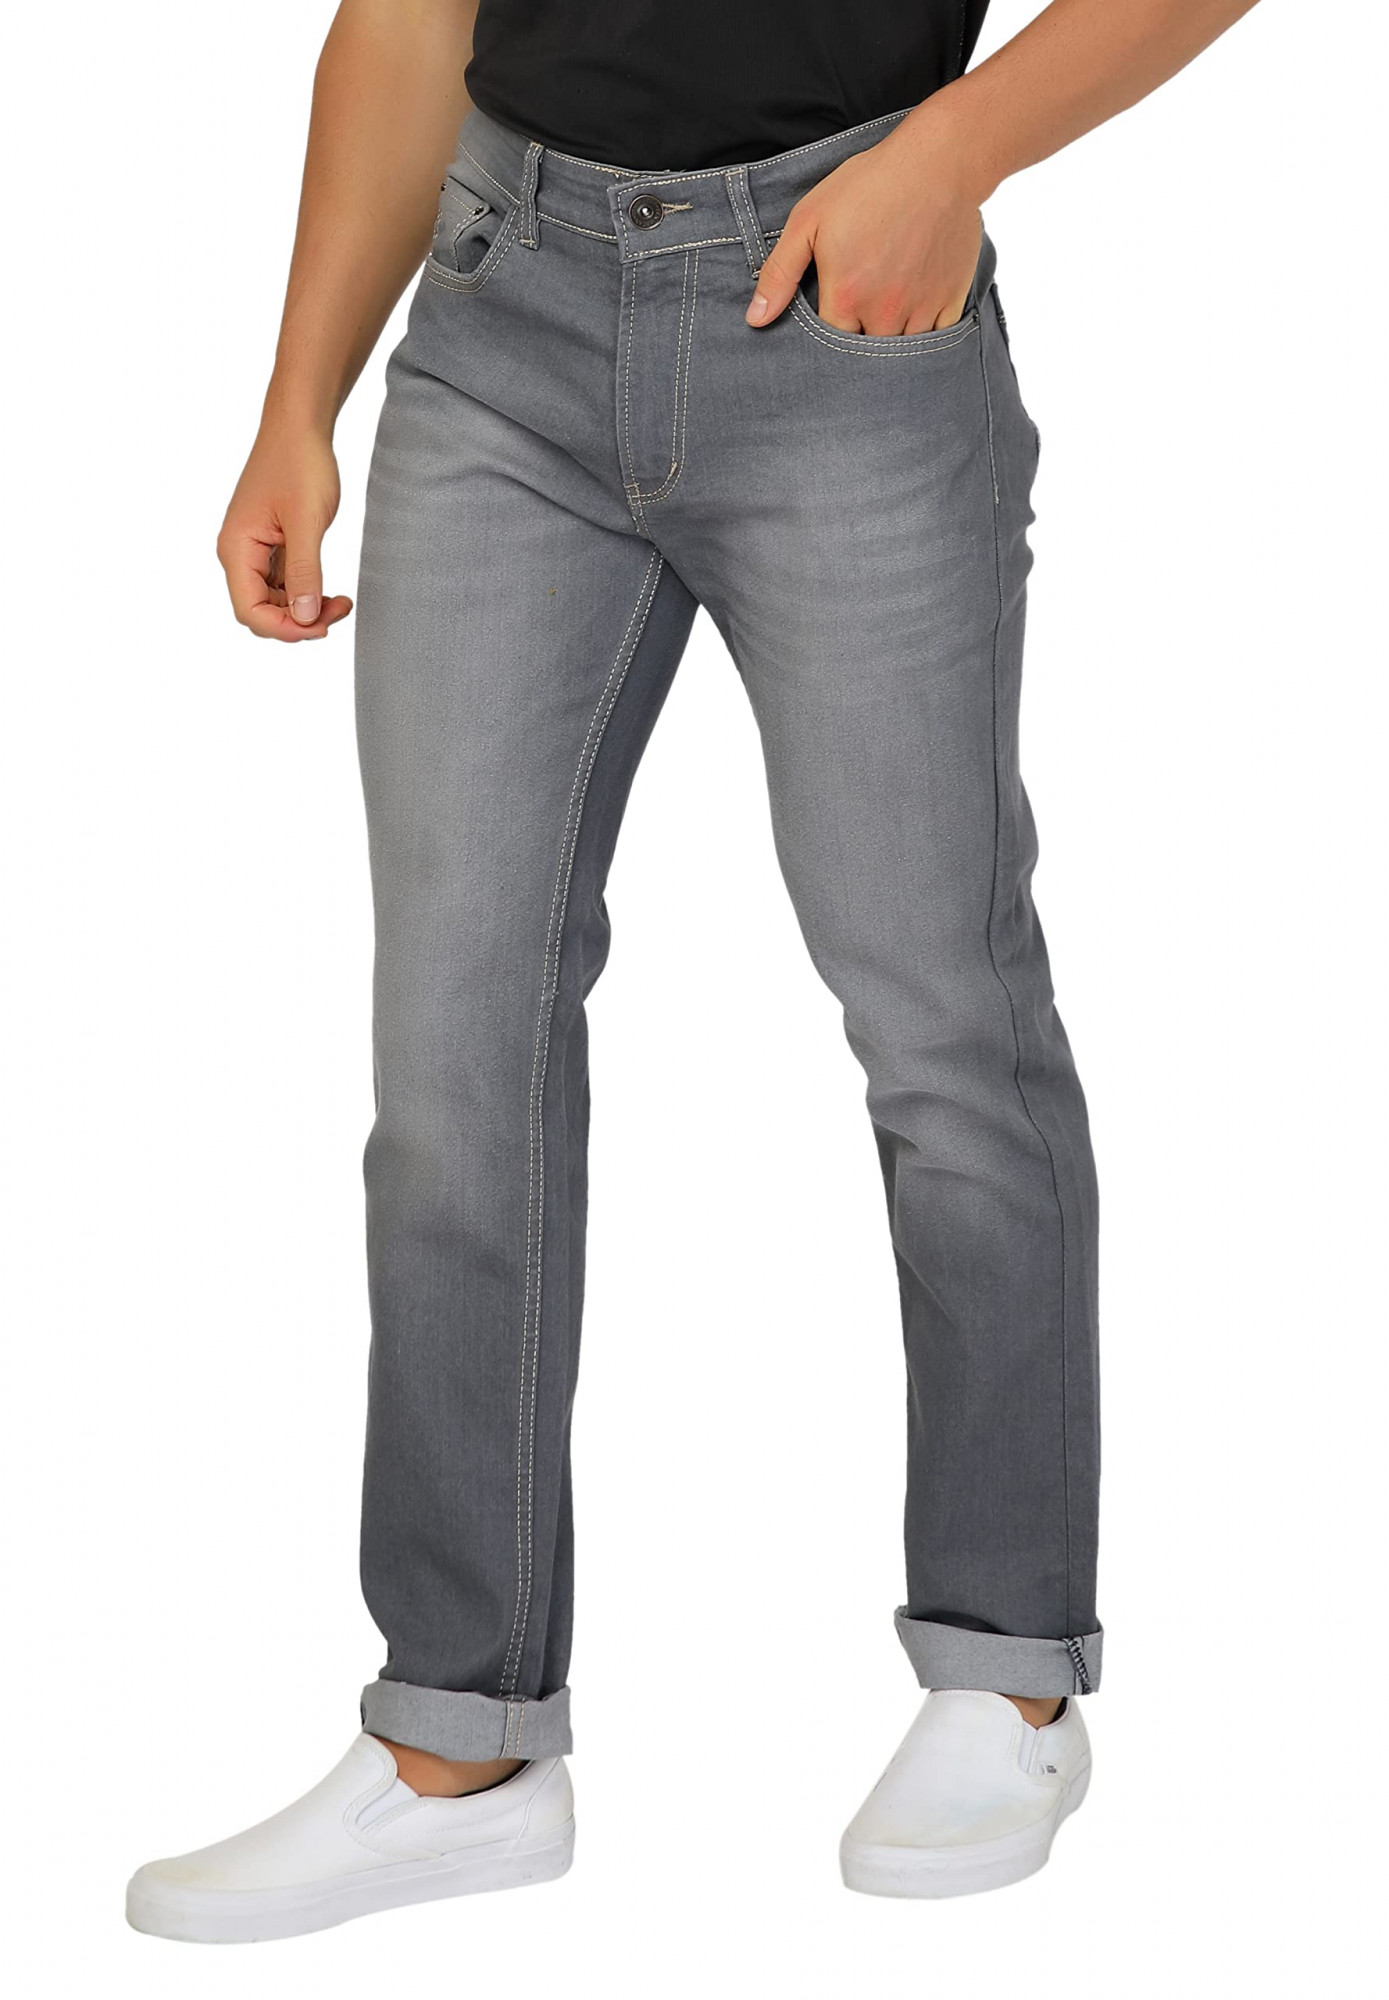 Calvin Klein Jeans Mens Cotton Spot Cuffed Buttoned Jeans Gray Size 31 -  Shop Linda's Stuff